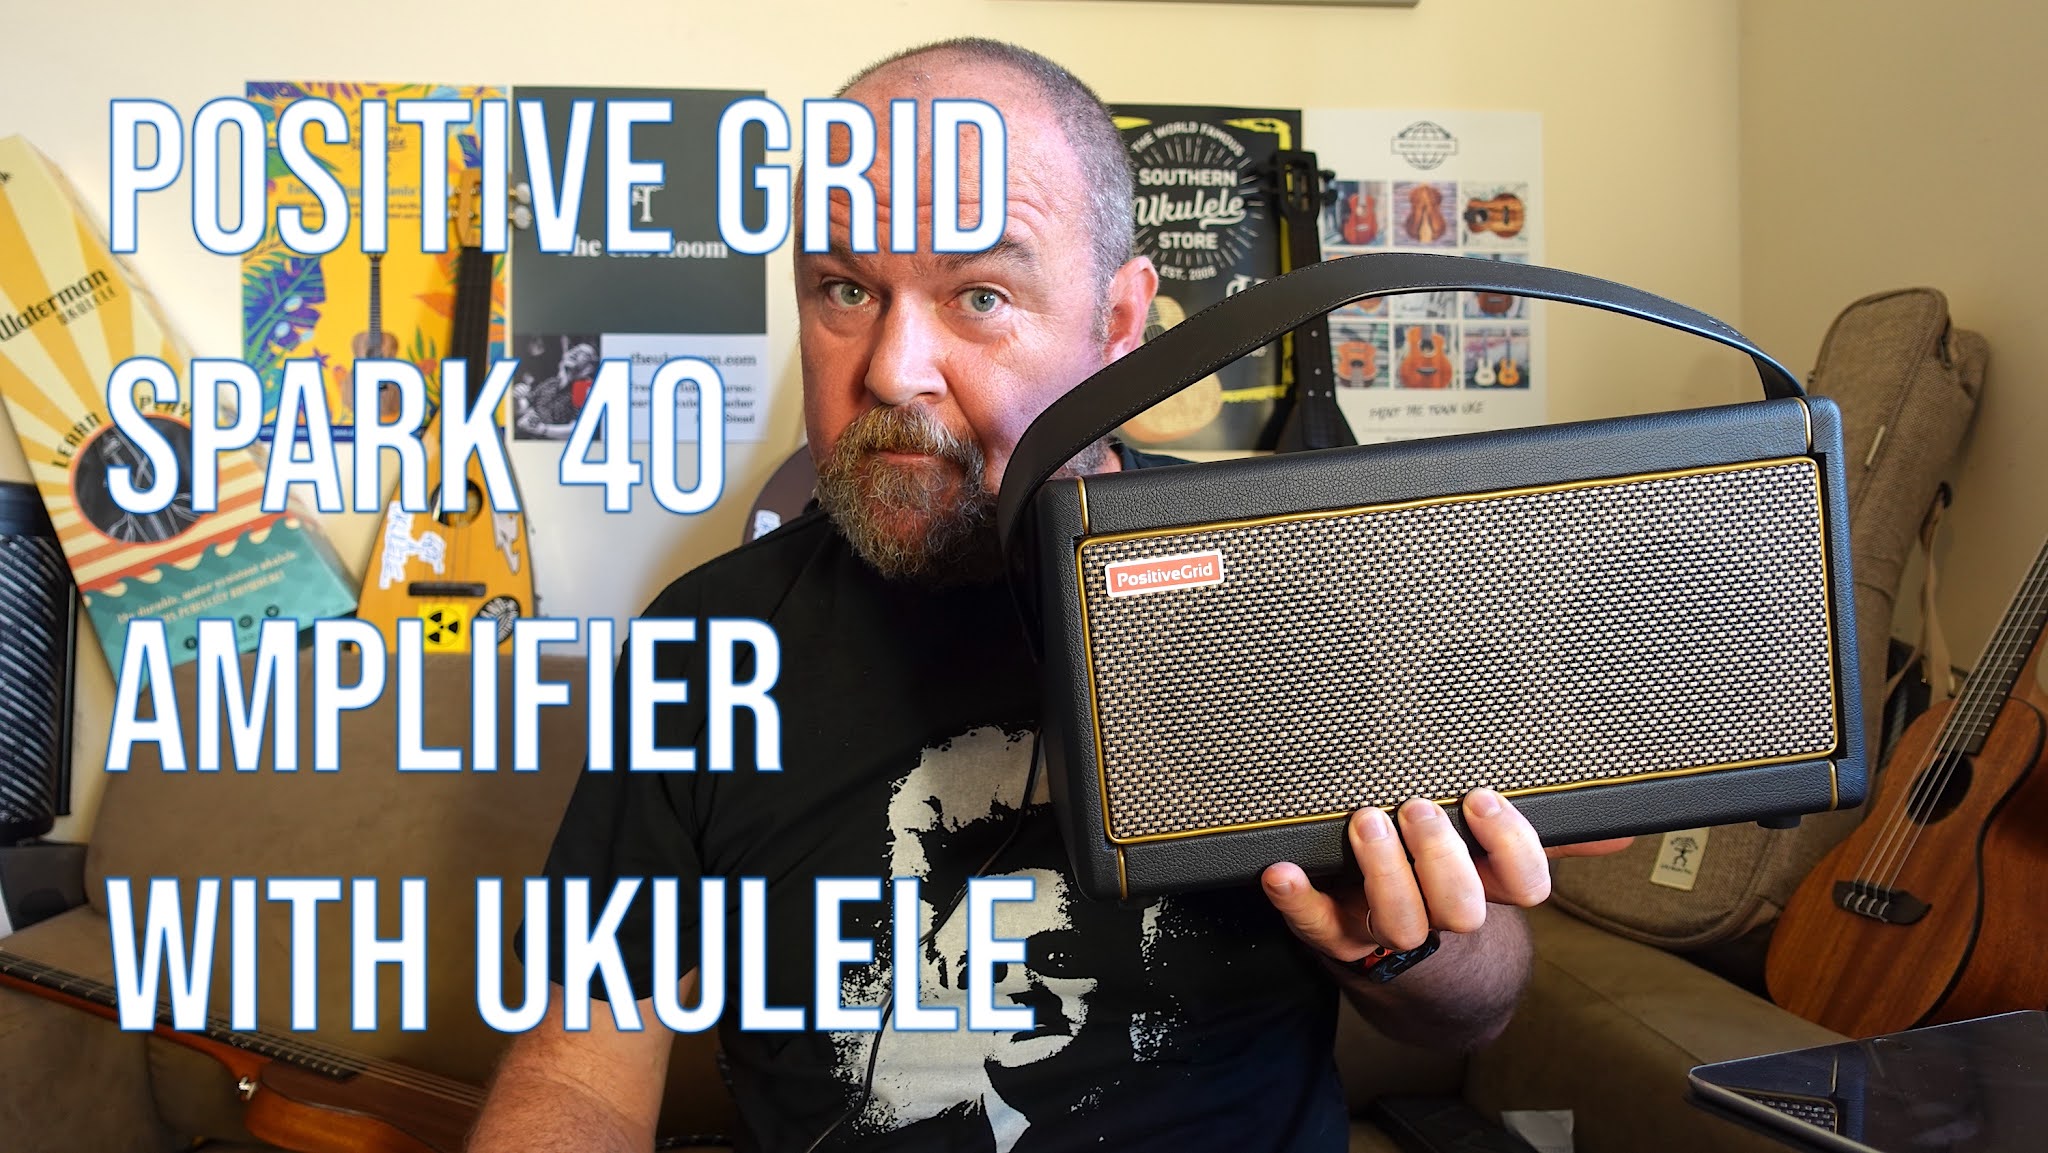 GOT A UKULELE - Ukulele reviews and beginners tips: Positive Grid Spark 40  Amplifier with Ukulele - REVIEW